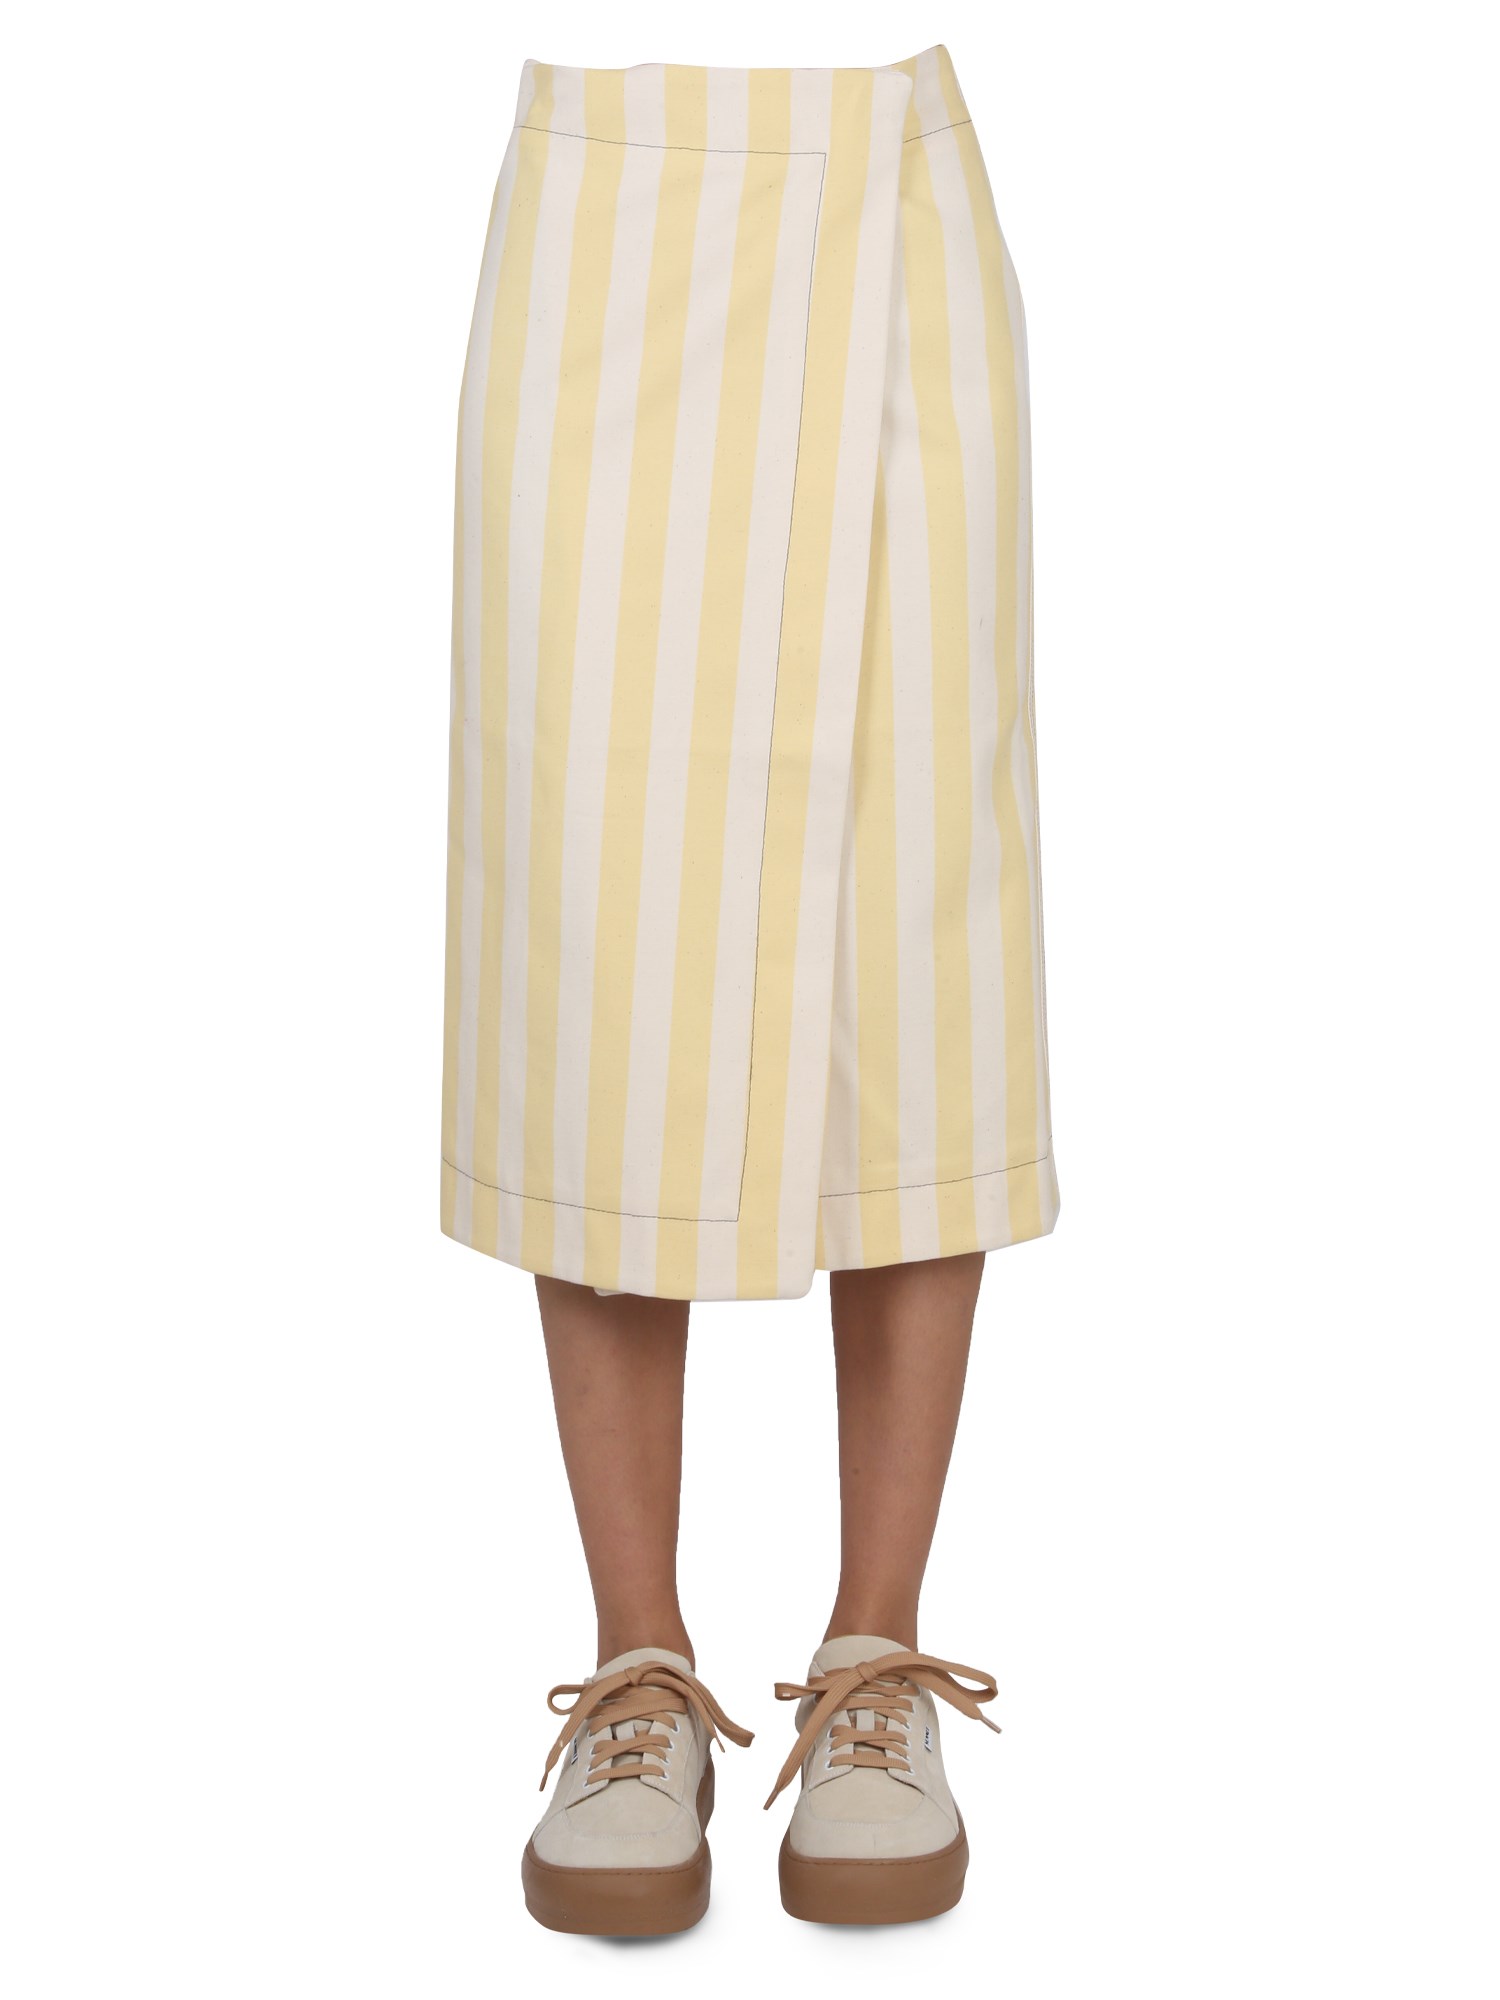 Sunnei sunnei striped pattern skirt